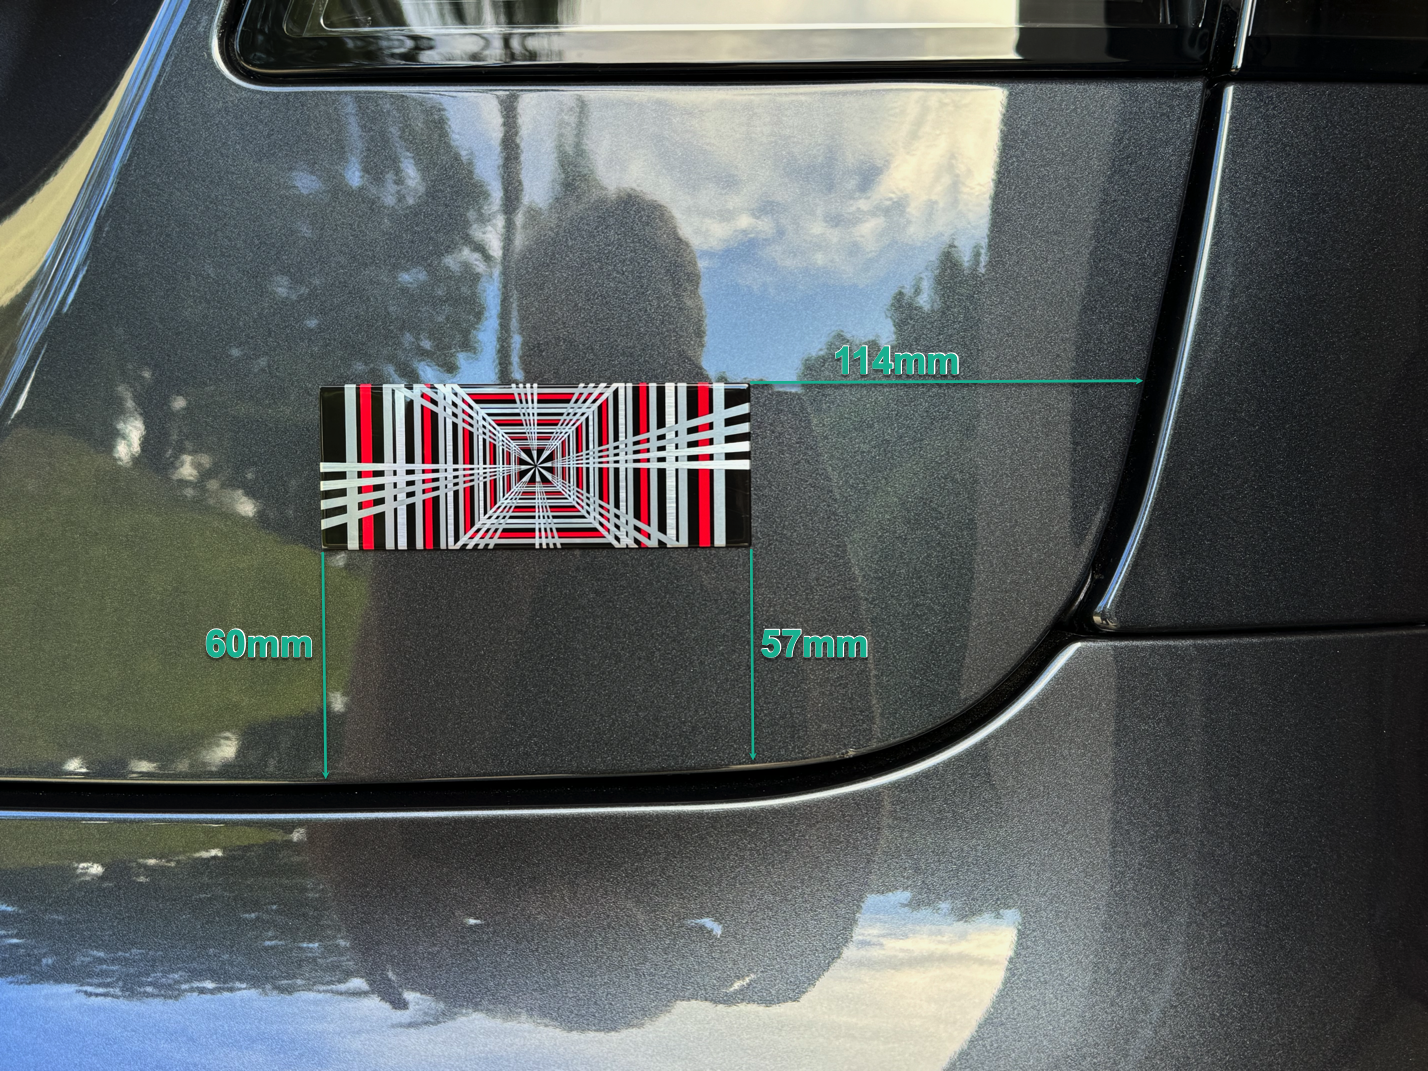 Model S Plaid Badge Placement | Tesla Motors Club